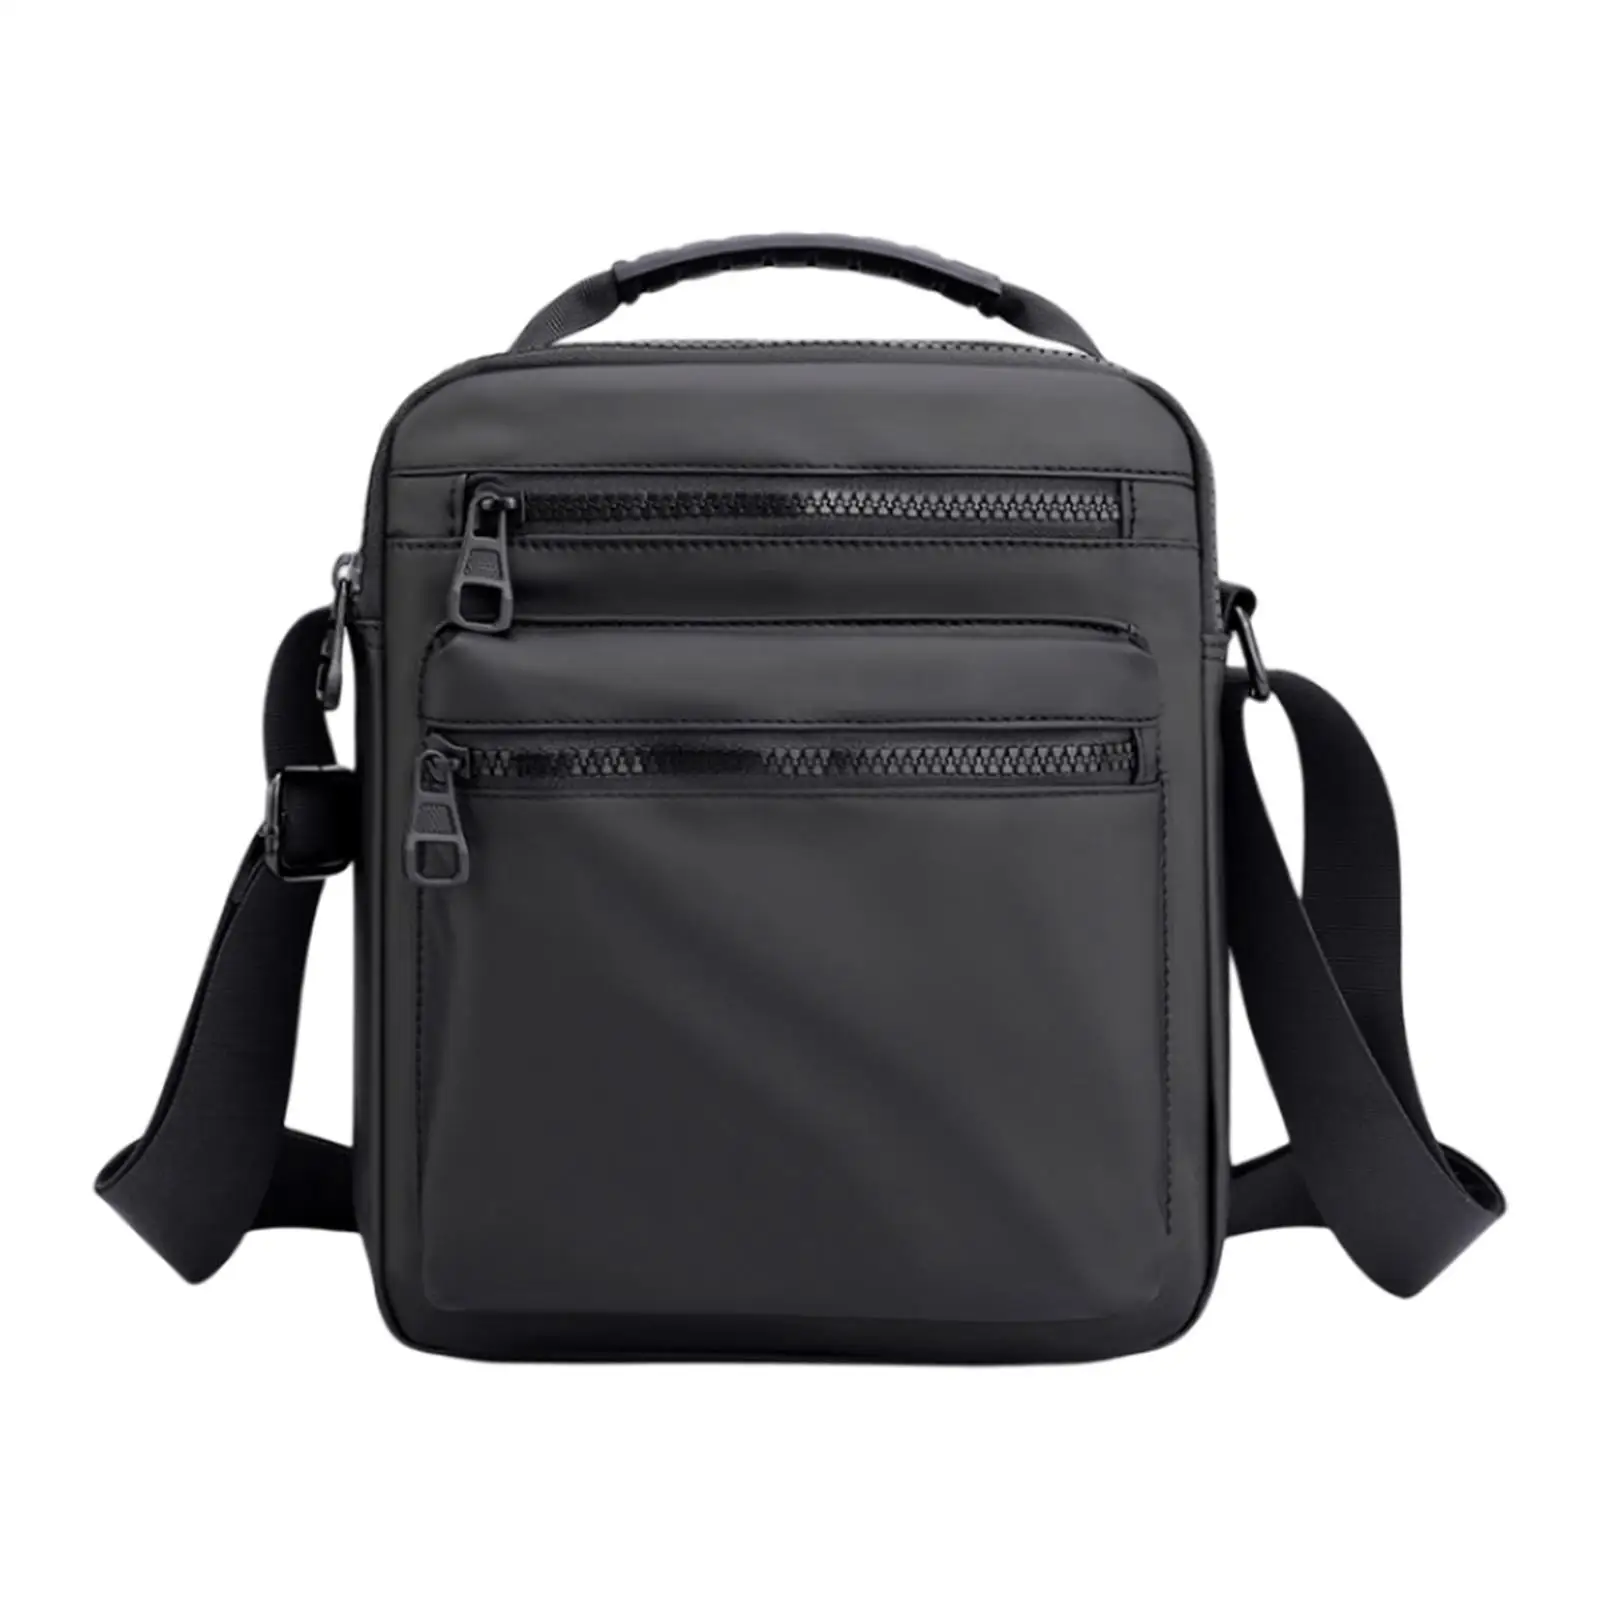 Men`s Messenger Bag Lightweight Gift for Family Friends Handbag Shoulder Bags for Backpacking Daily Use Picnic Biking Adults